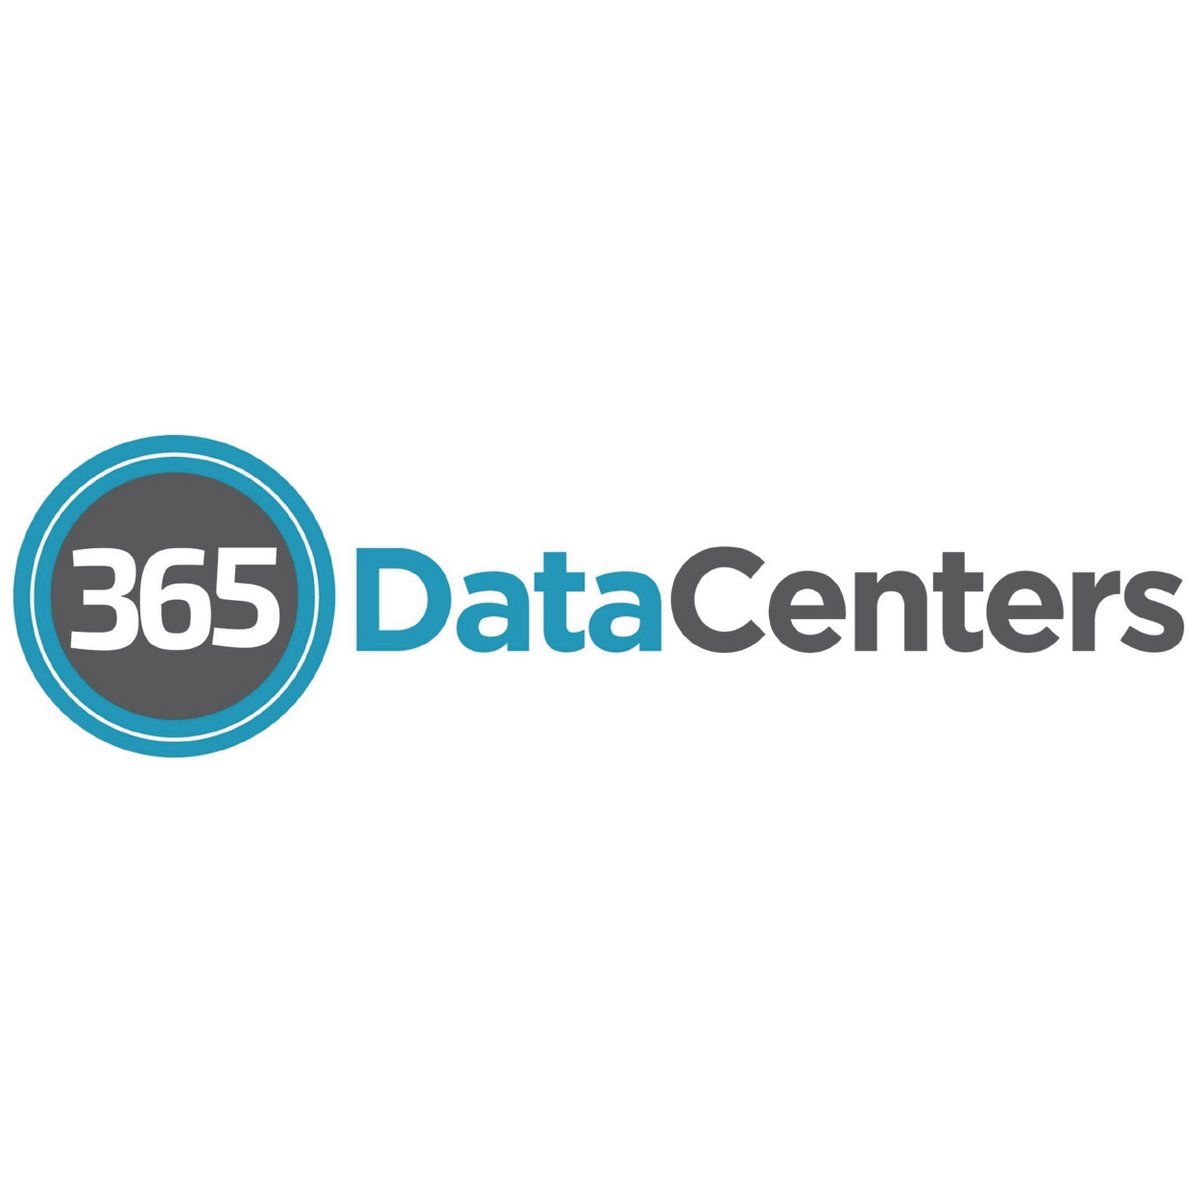 365 data centers-01